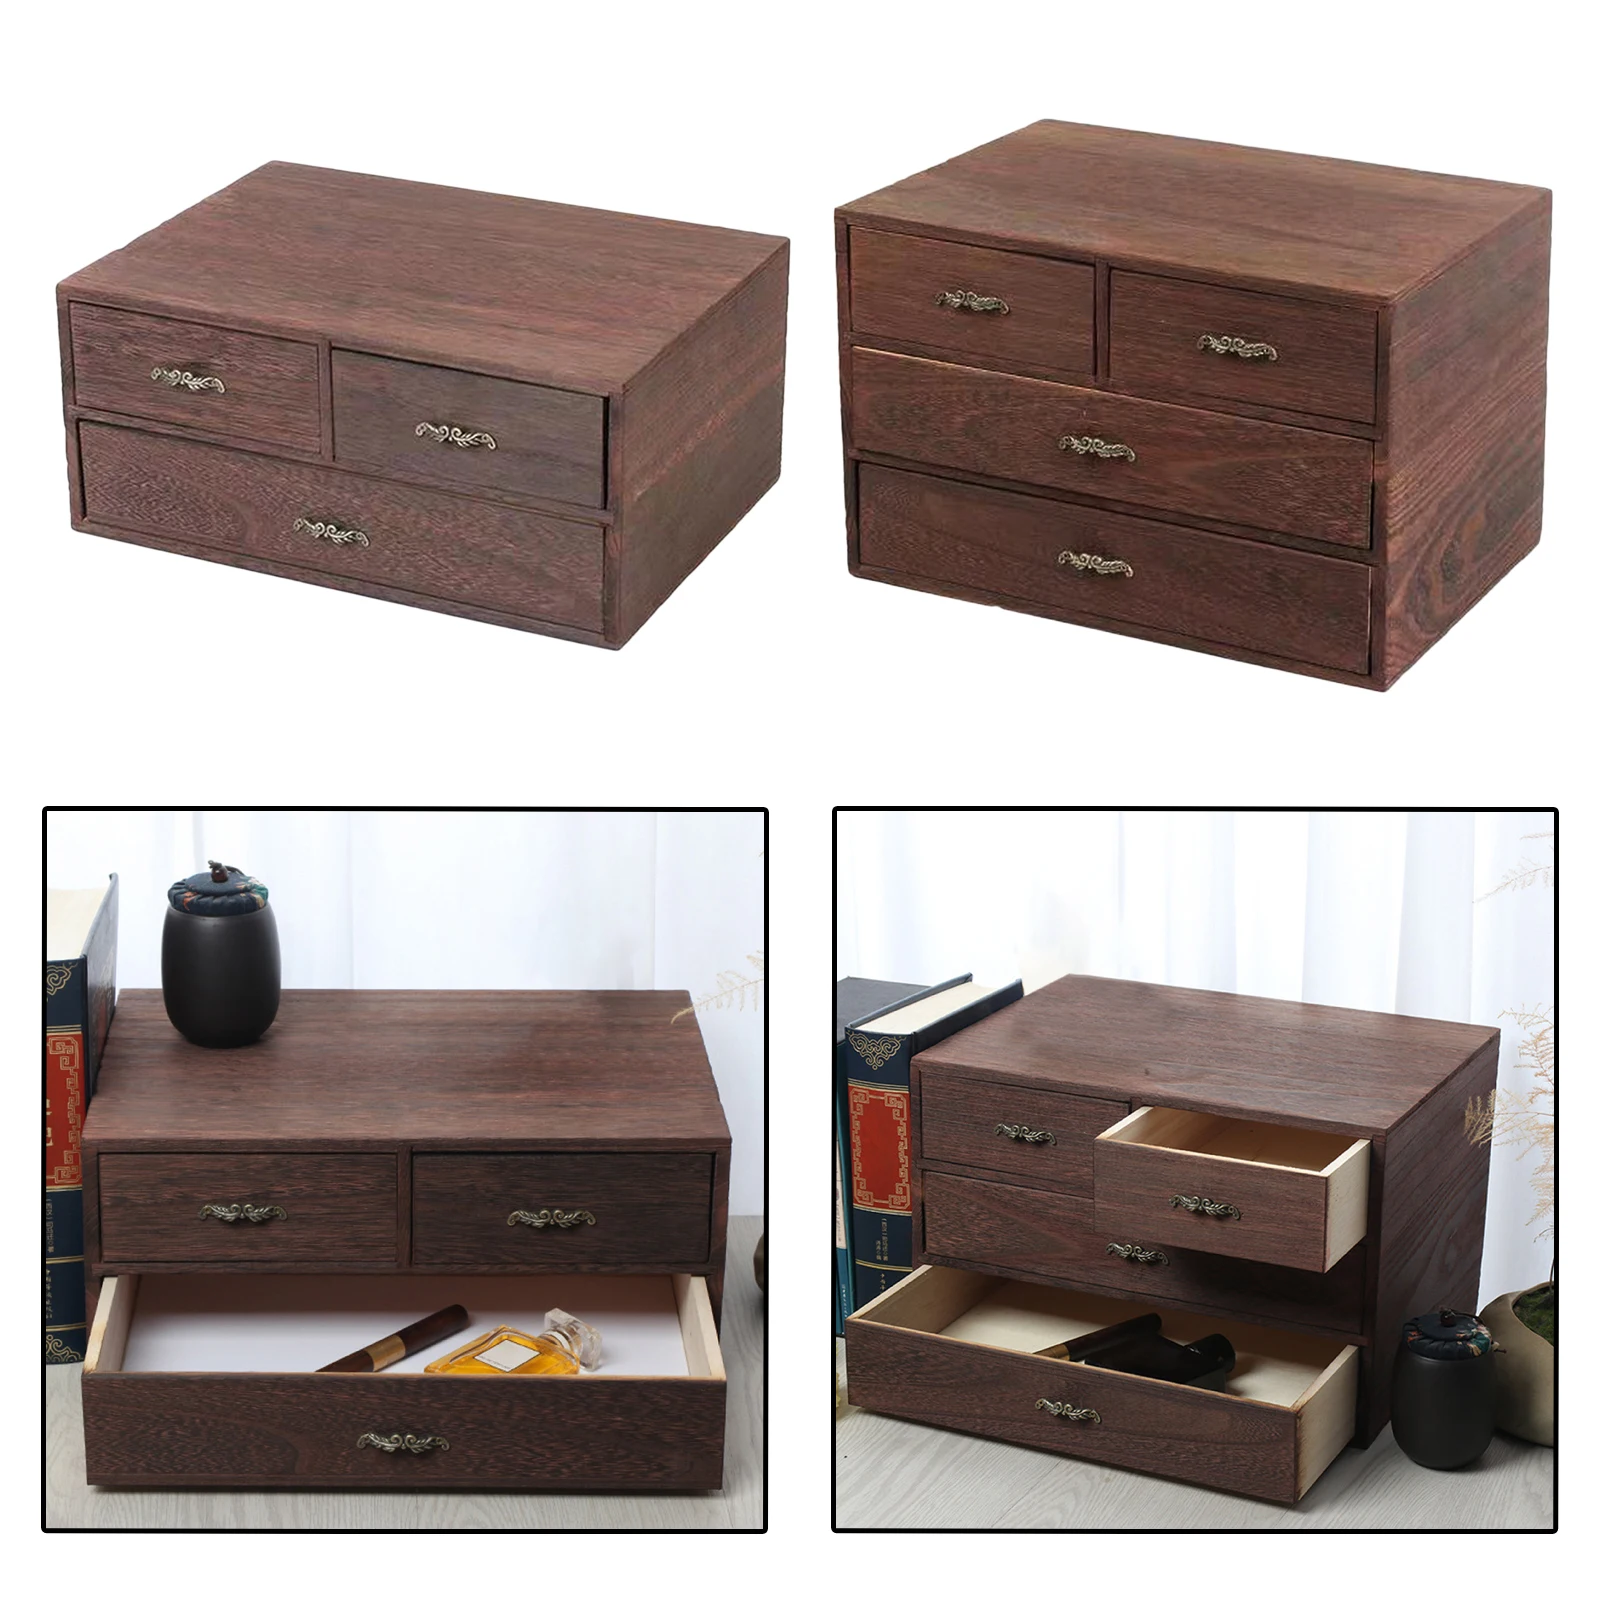 Retro Jewelry Box Drawer Type Organizer Desktop Wood Storage Case Home Decorative Gift Boxes Jewelry Trinket Treasure Organizer